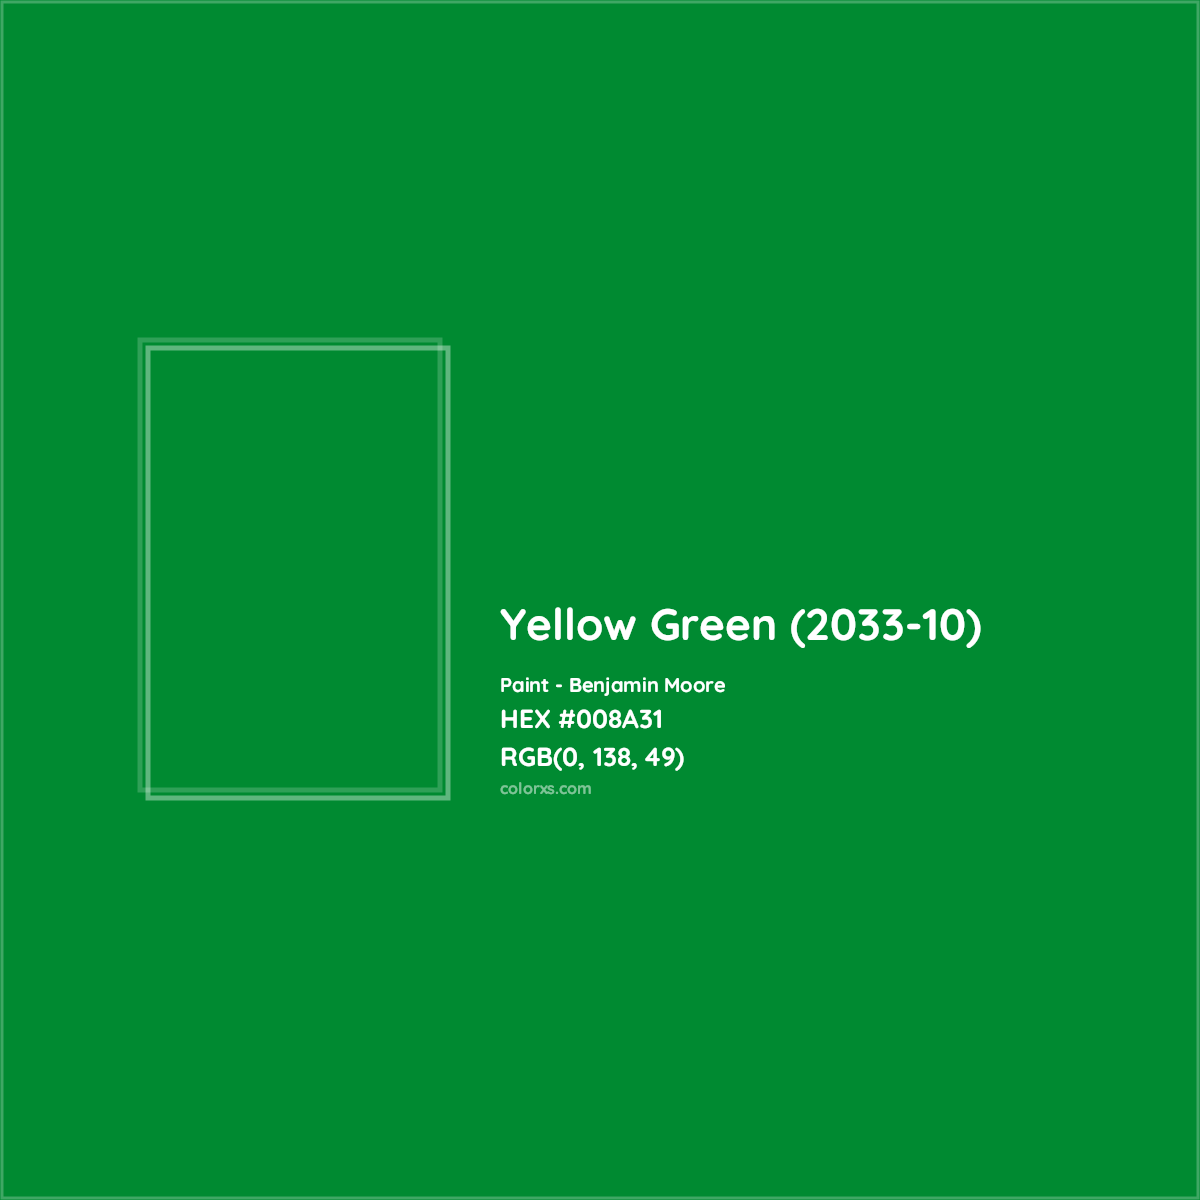 HEX #008A31 Yellow Green (2033-10) Paint Benjamin Moore - Color Code